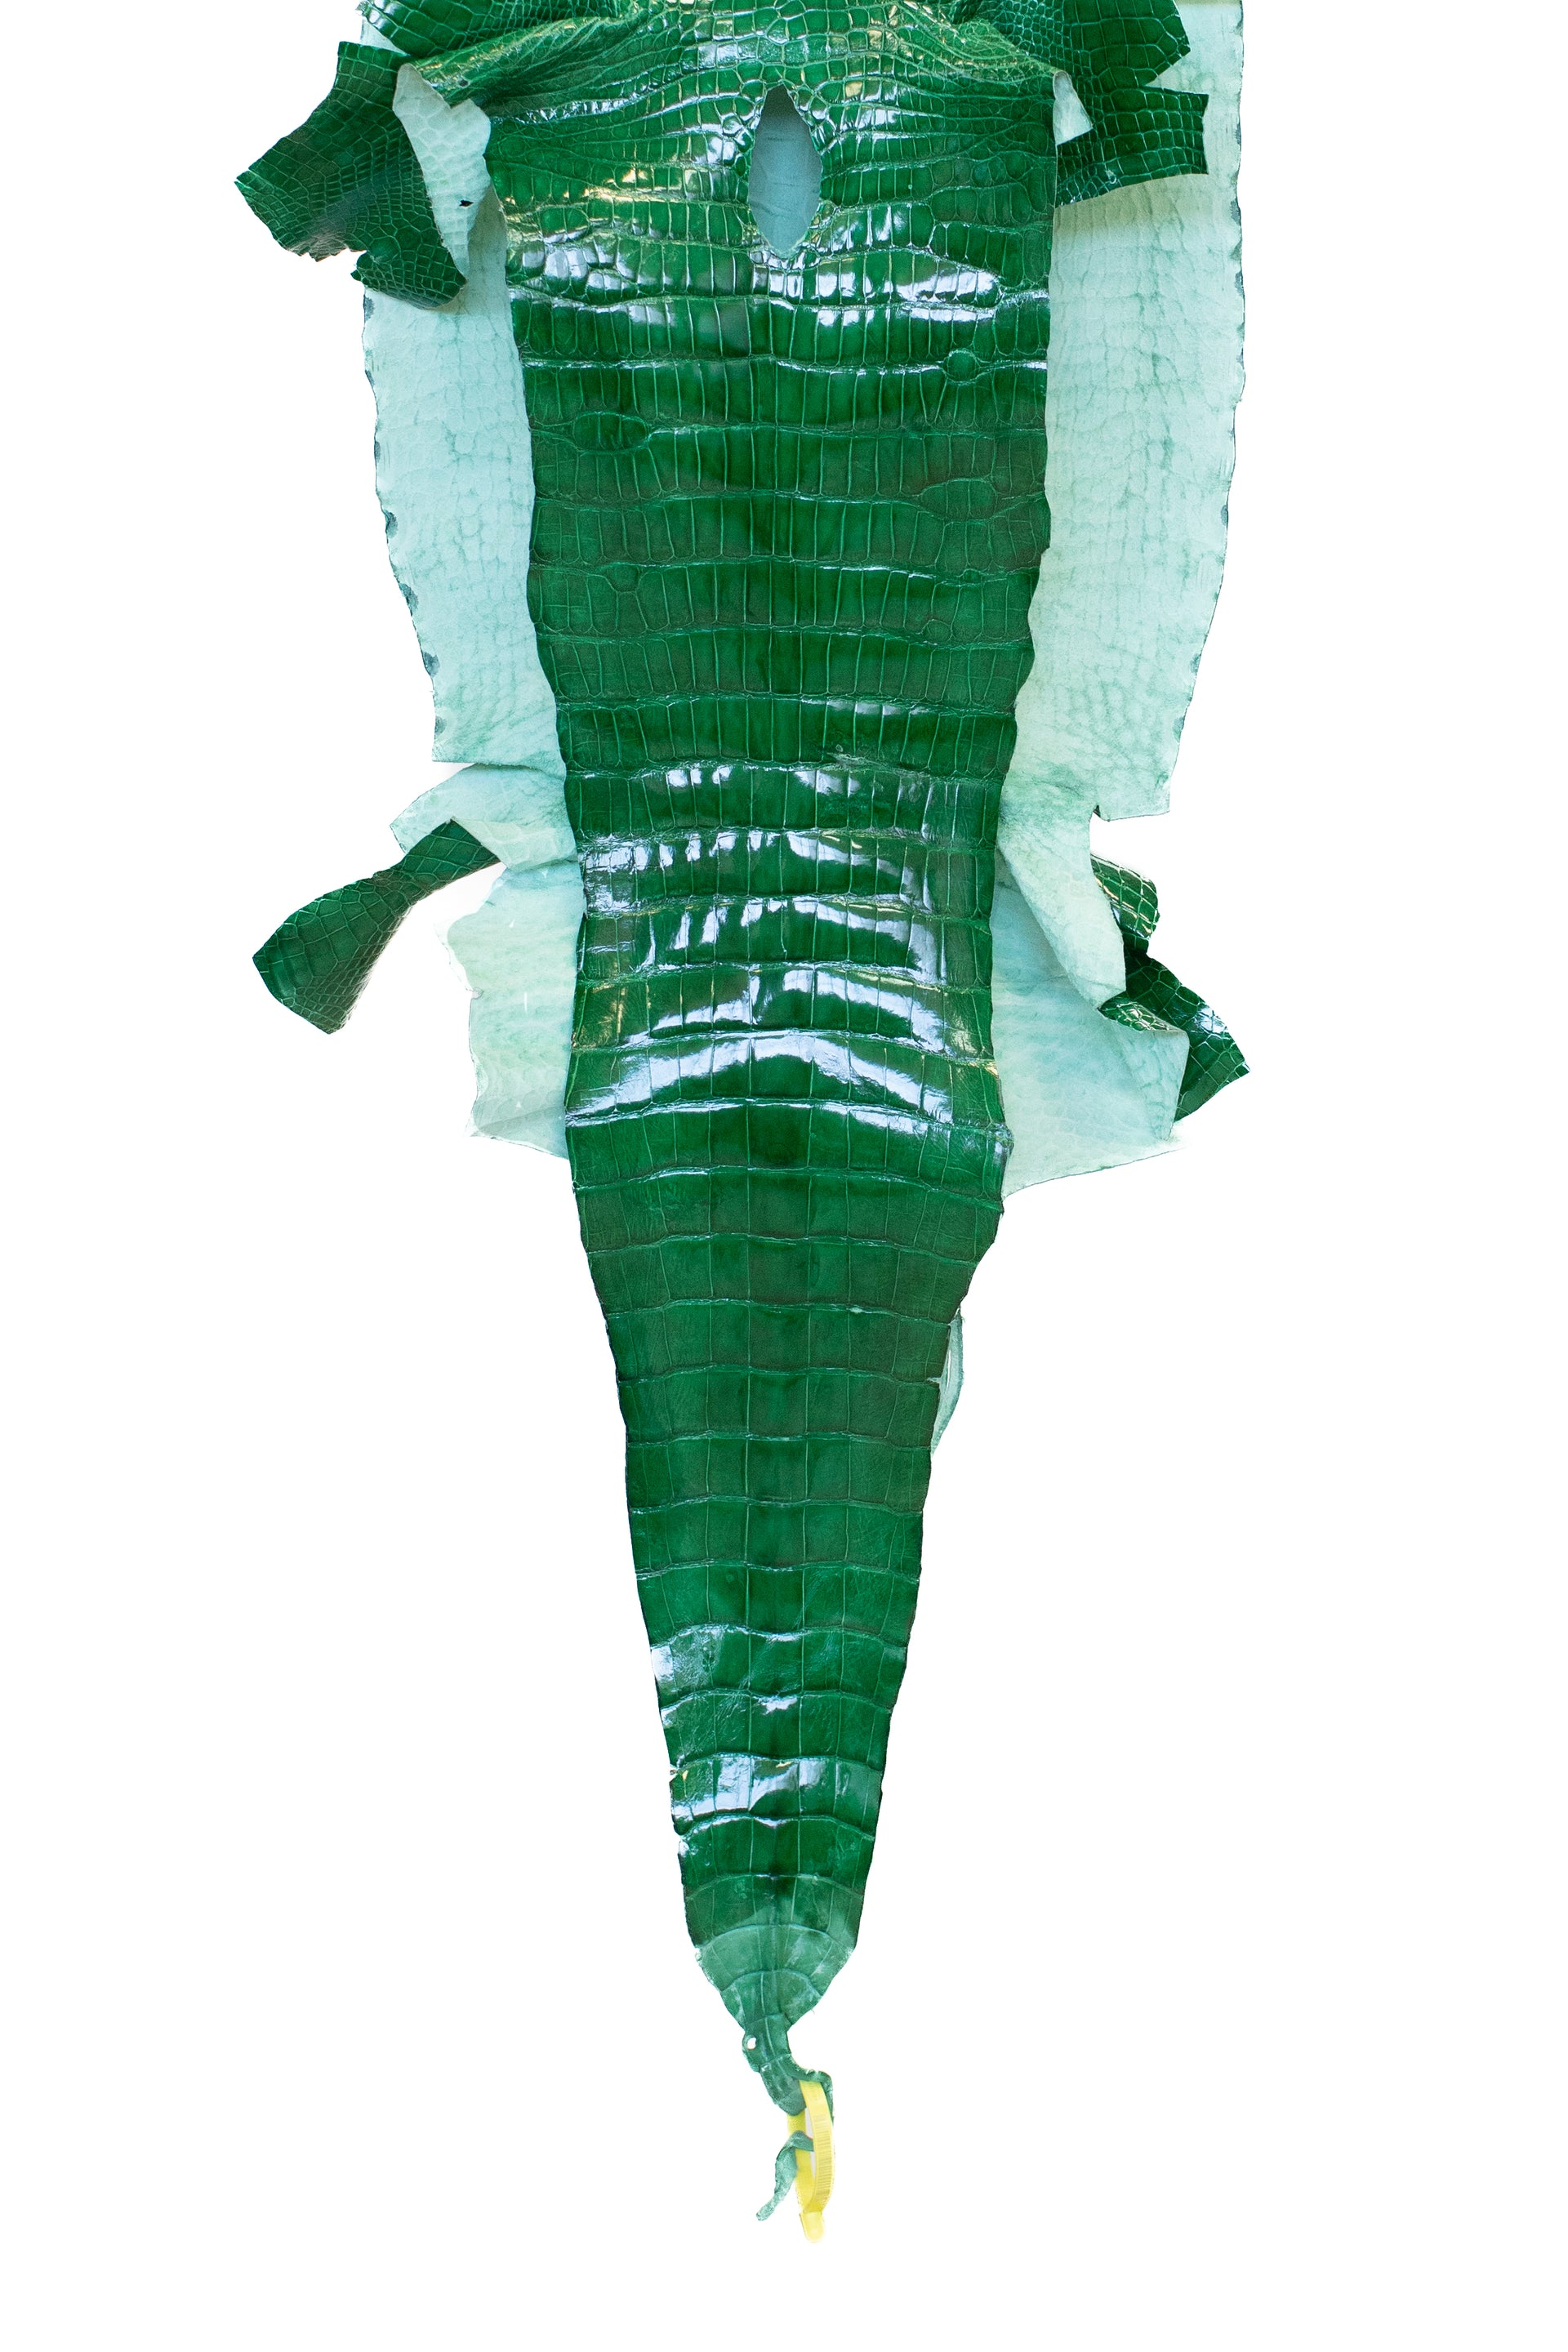 41 cm Grade 2/3 Kelly Green Glazed Wild American Alligator Leather - Tag: LA22-0031227